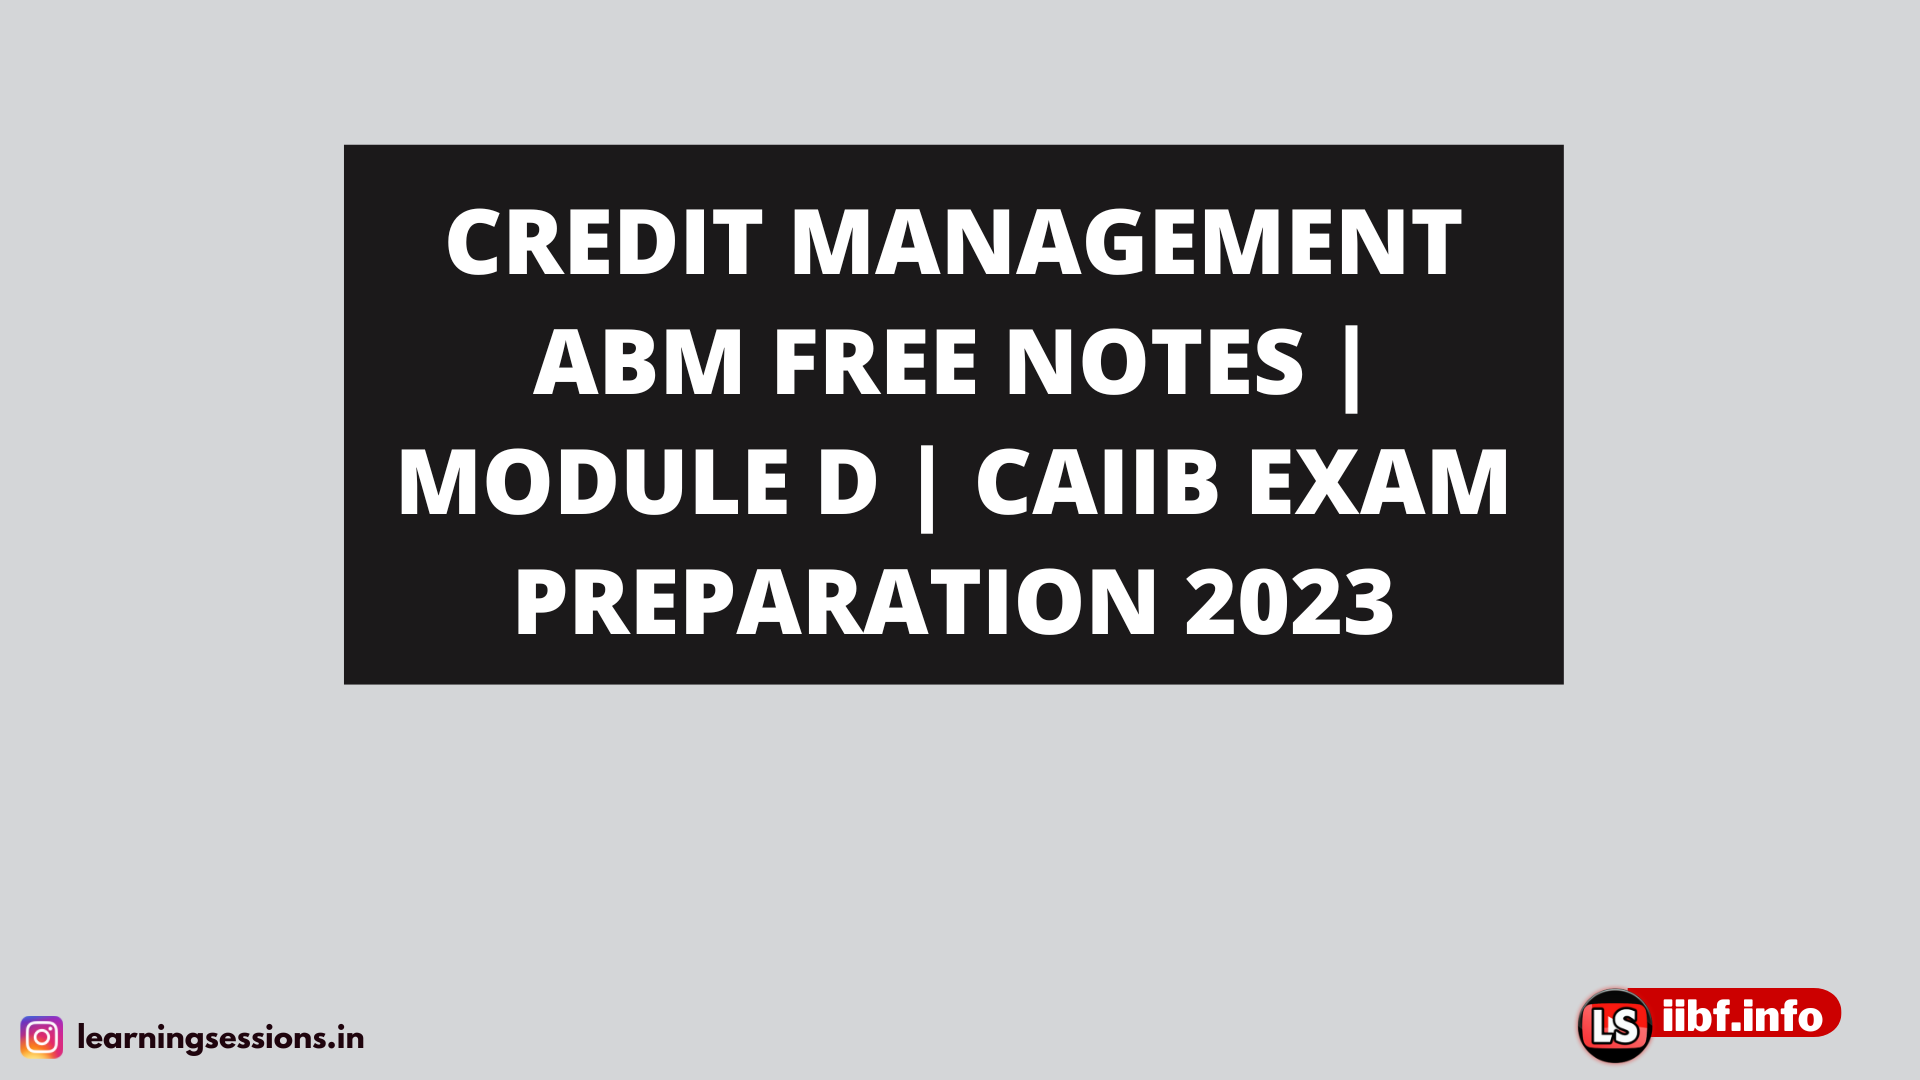 CREDIT MANAGEMENT ABM FREE NOTES | MODULE D | CAIIB EXAM PREPARATION 2023